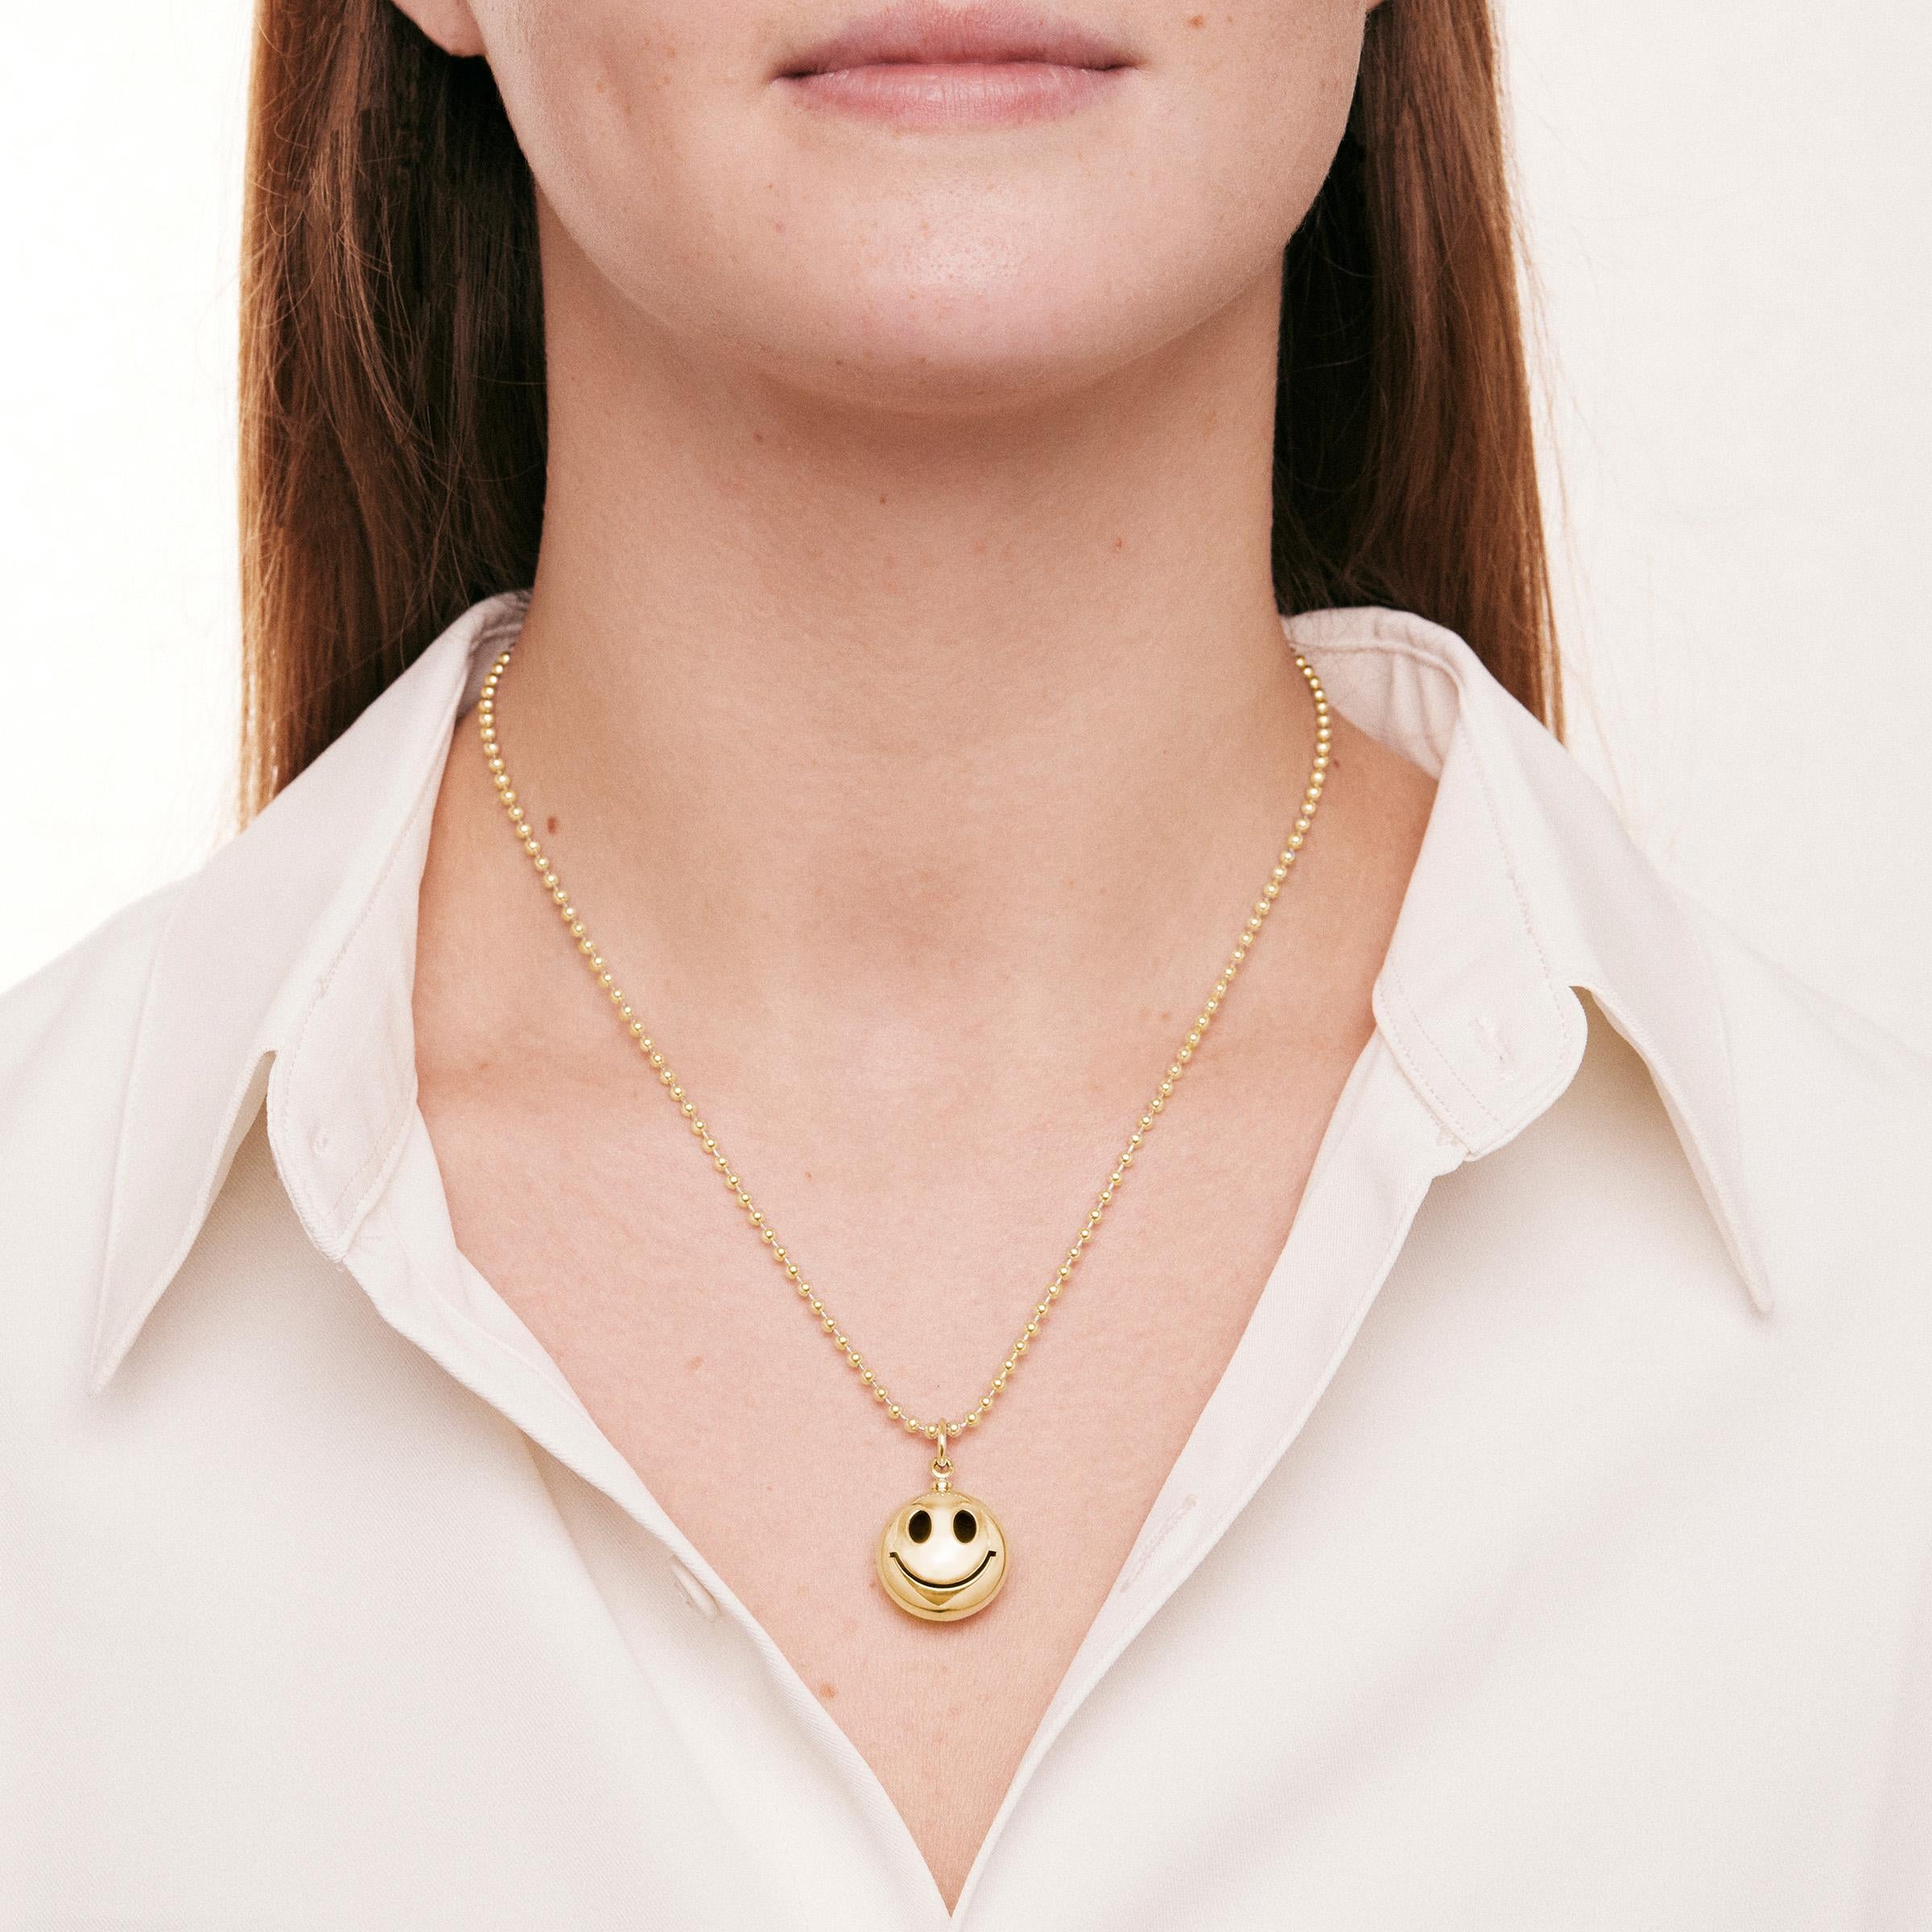 Artisan Zoma Design 14 Carat Yellow Gold Smiley Face Pendant Necklace For Sale